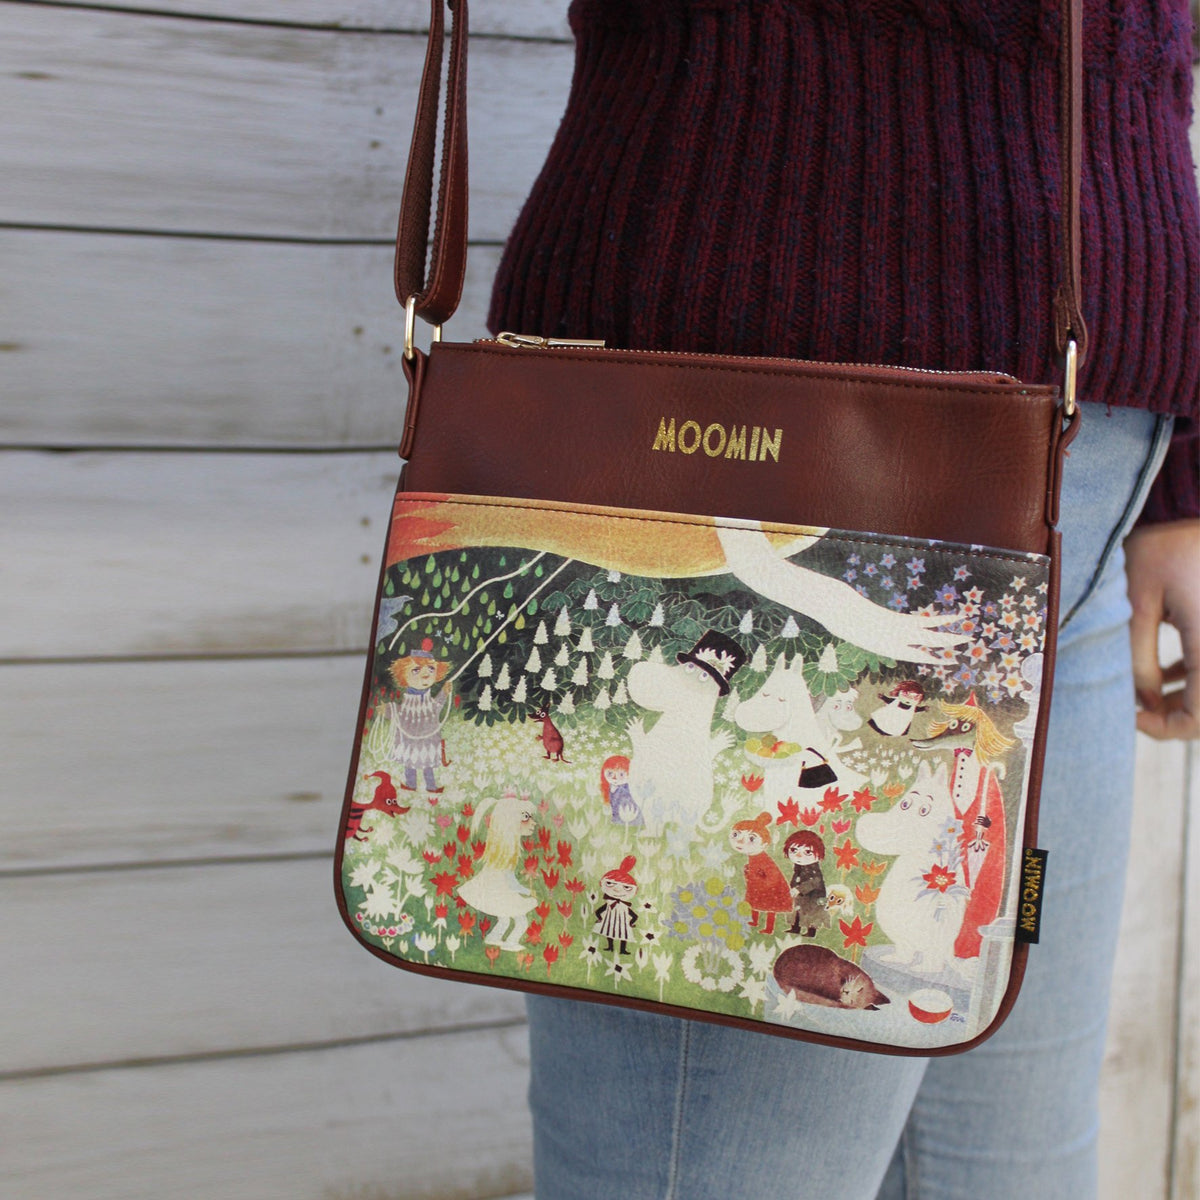 Moomin Dangerous Journey Mini Bag